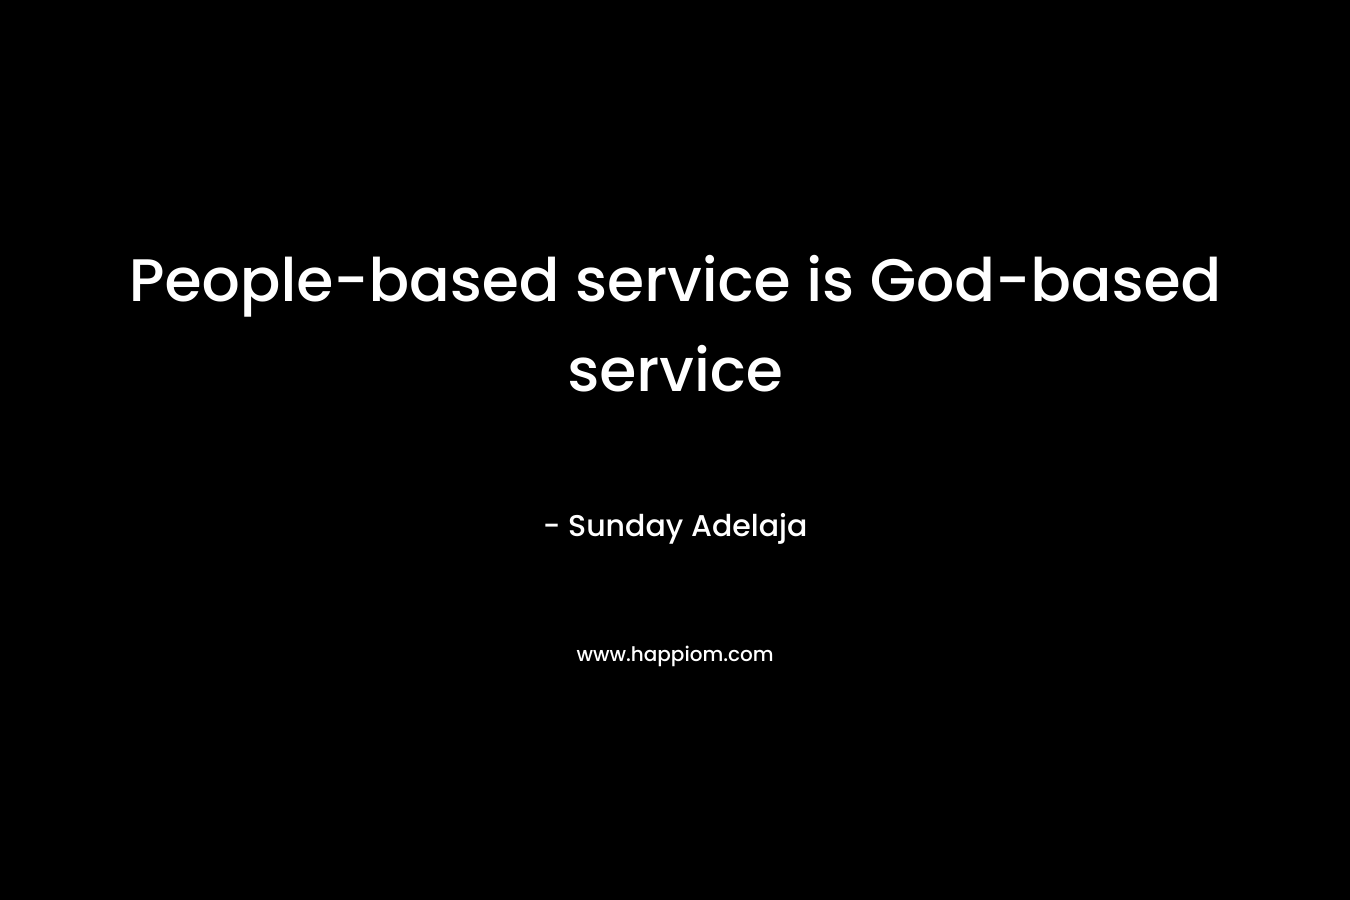 People-based service is God-based service